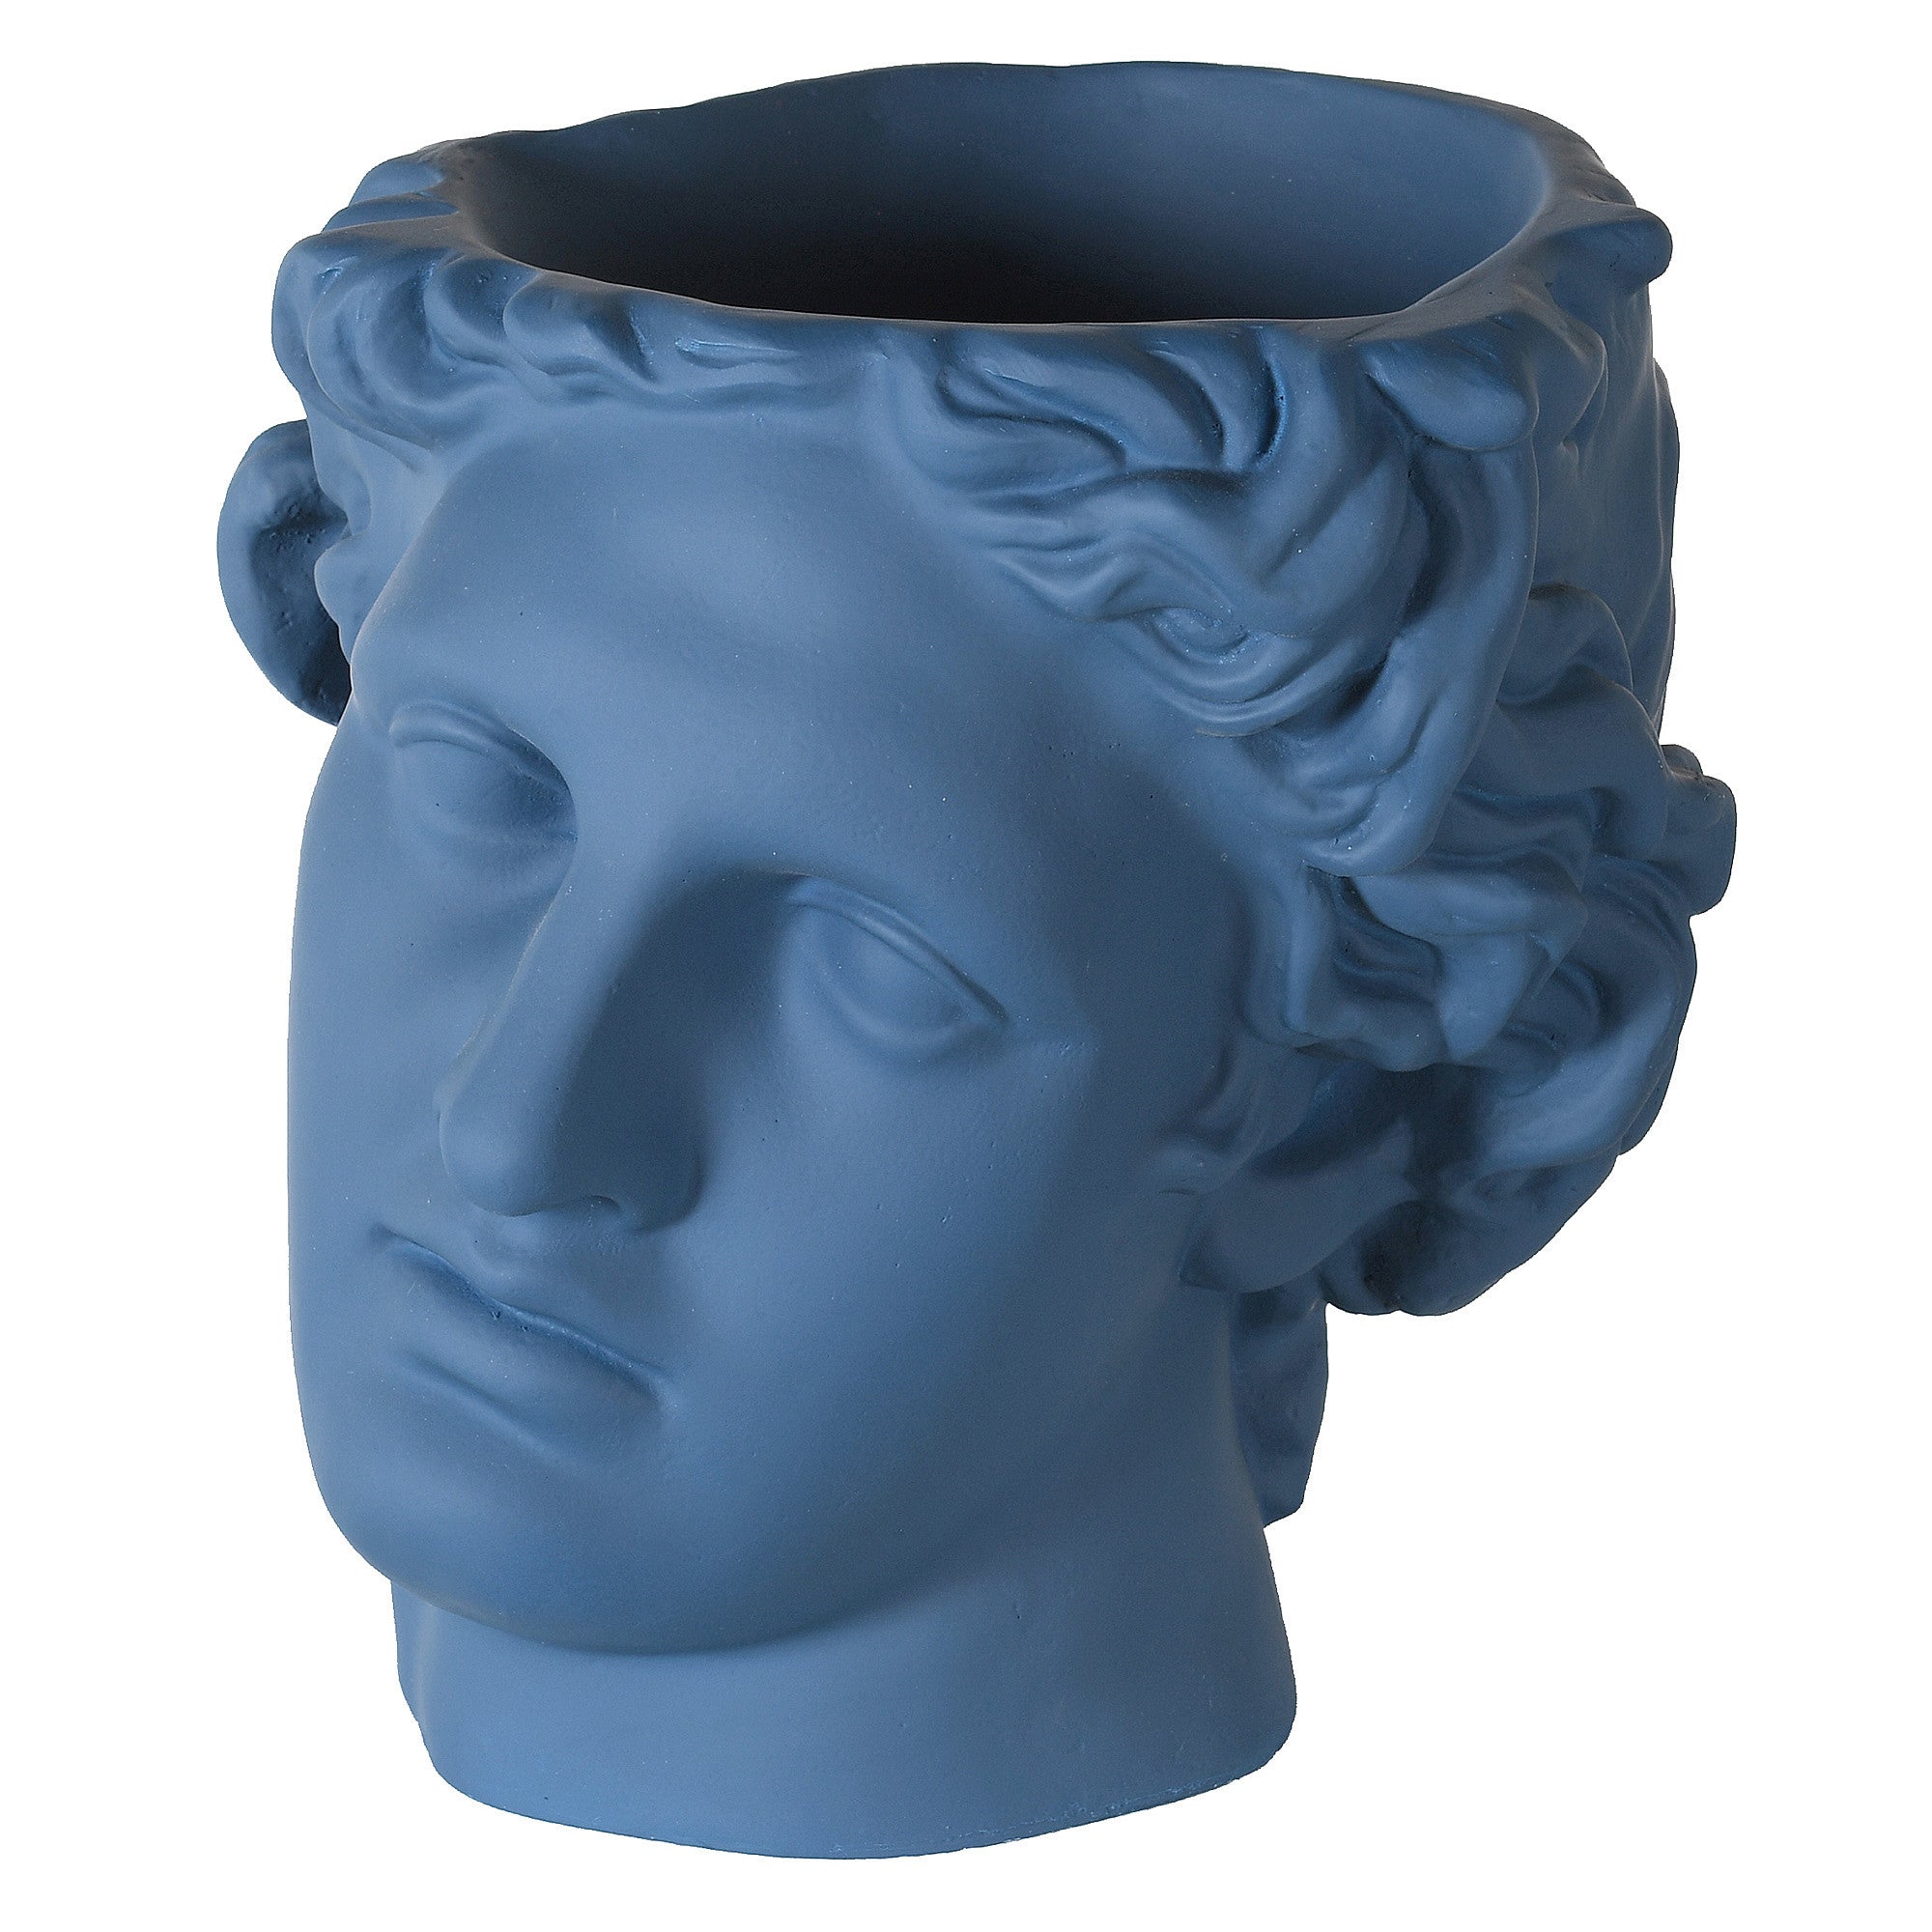 Striking Classical Head Blue Bust Planter